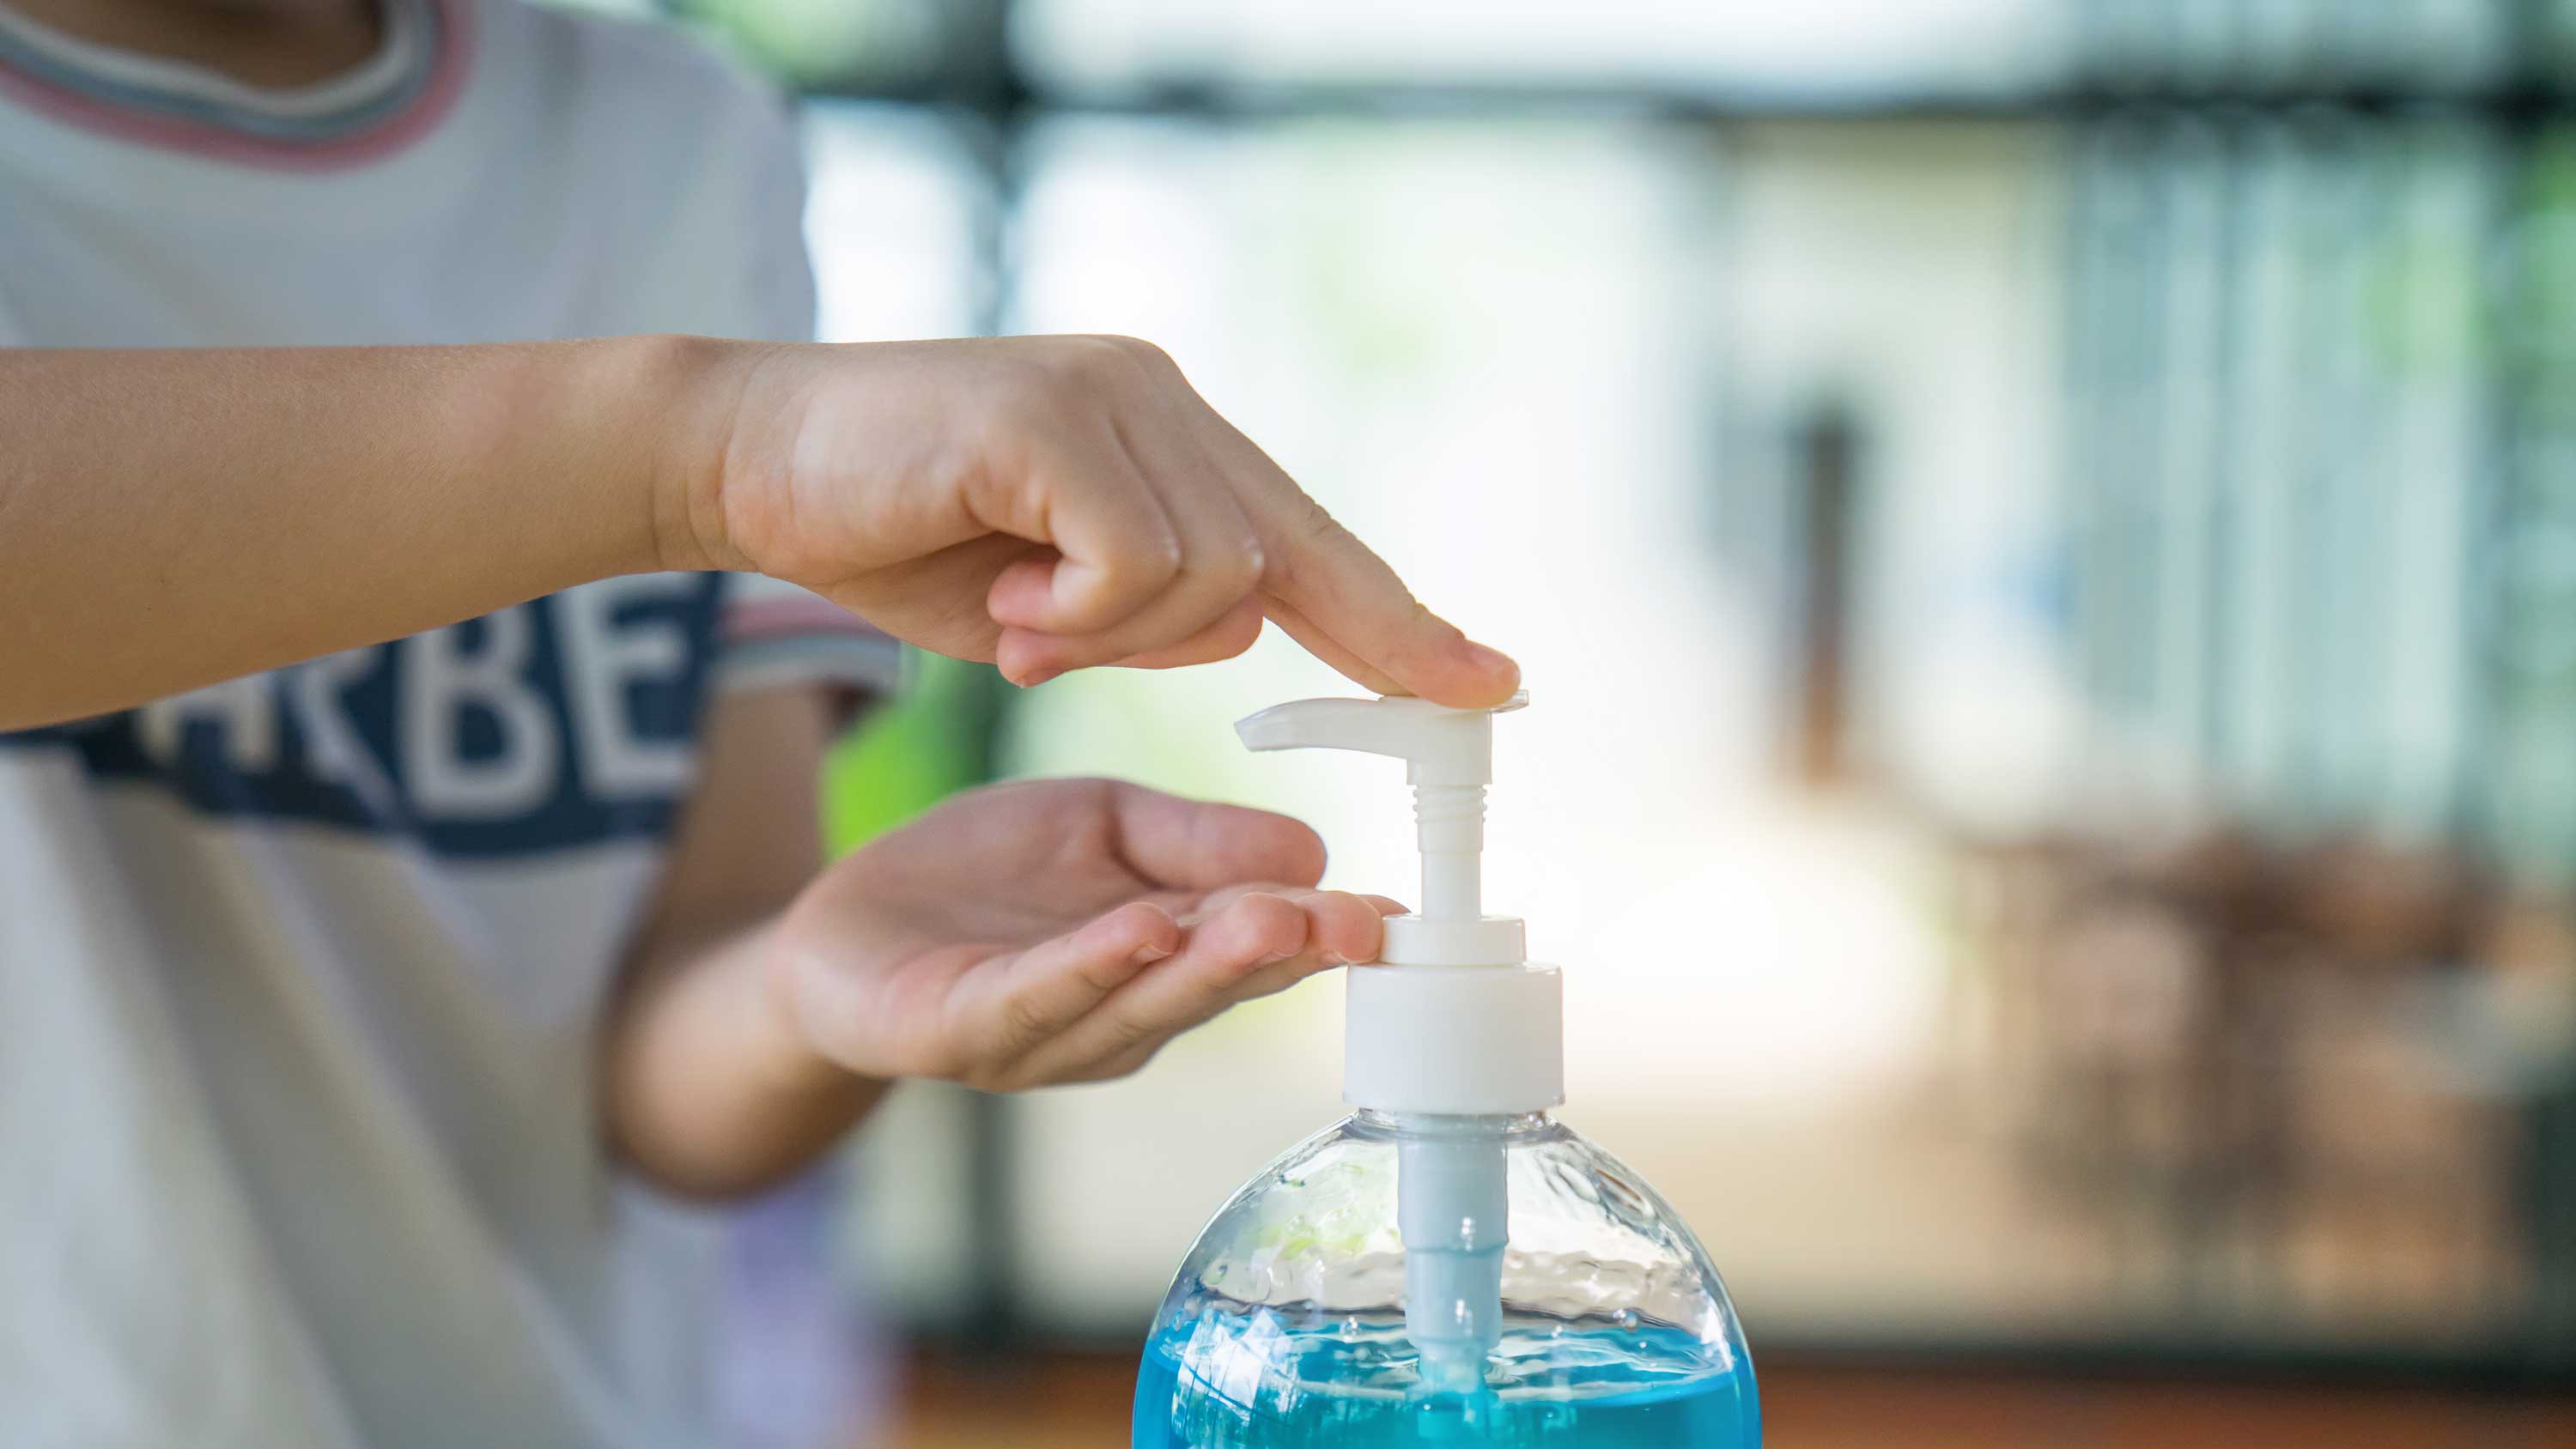 A child using hand sanitizer